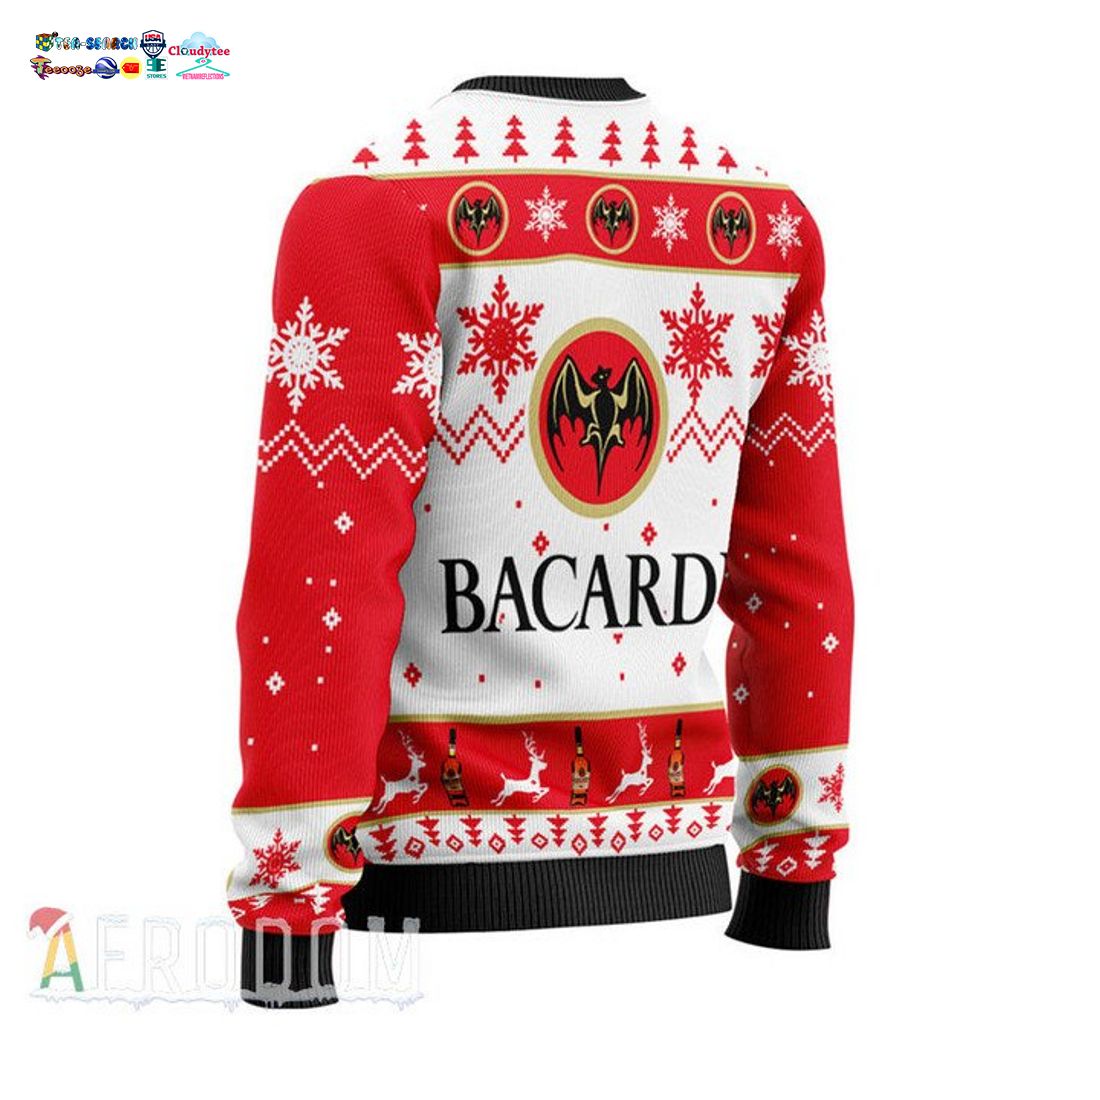 Bacardi Christmas Sweater